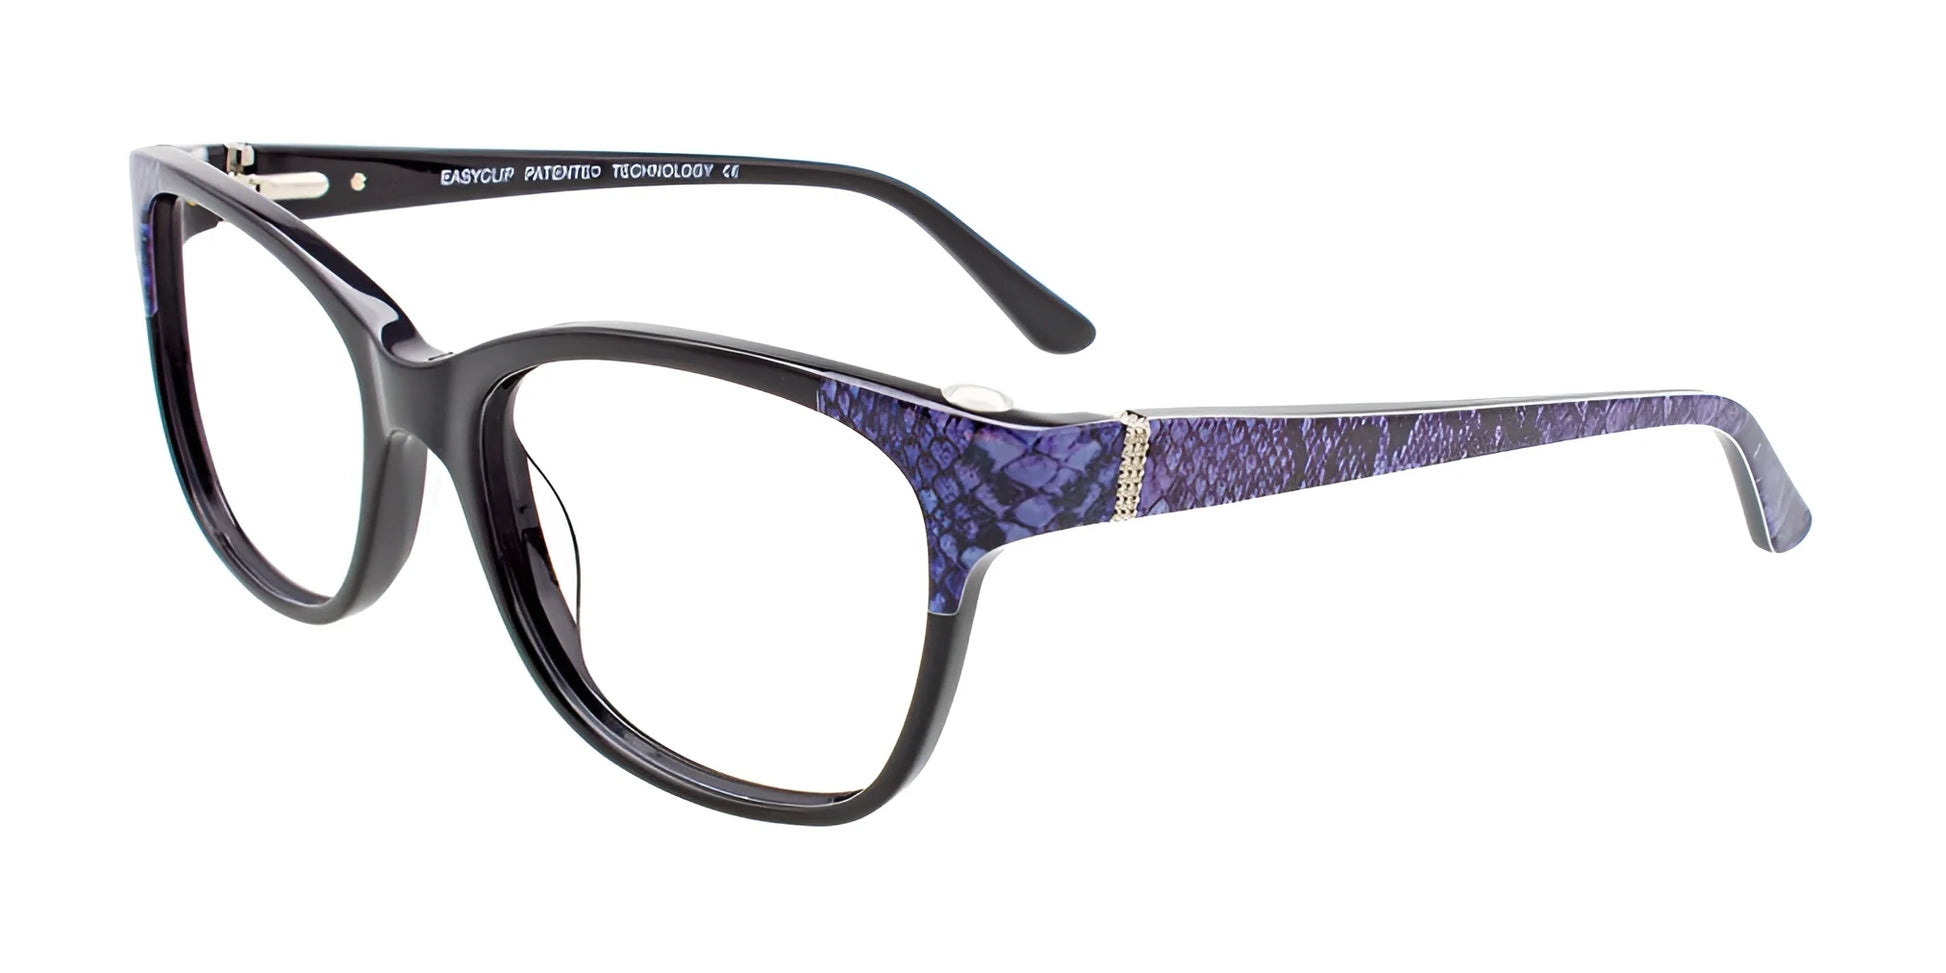 EasyClip EC464 Eyeglasses Black & Lavender Snake Pattern